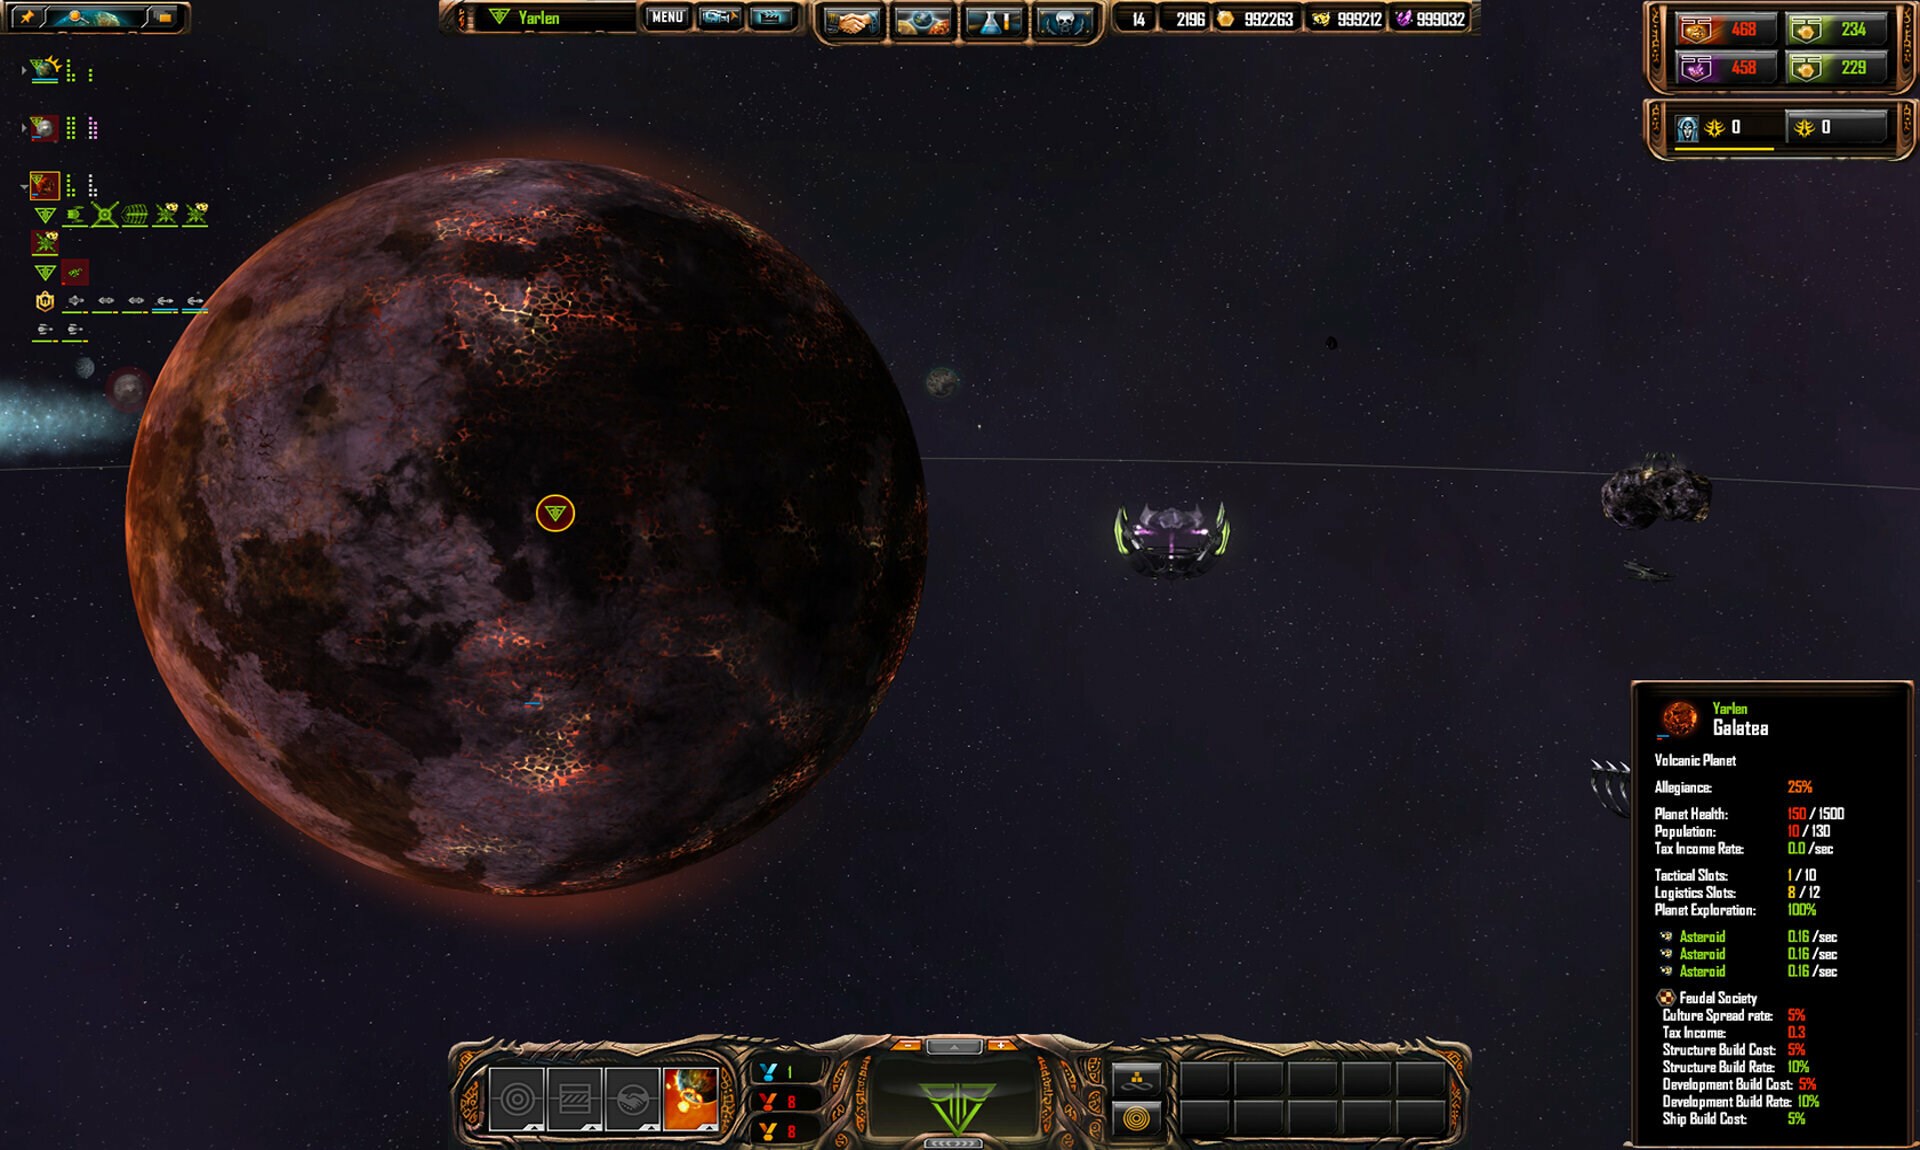 Sins of a Solar Empire: Rebellion screenshot 46775